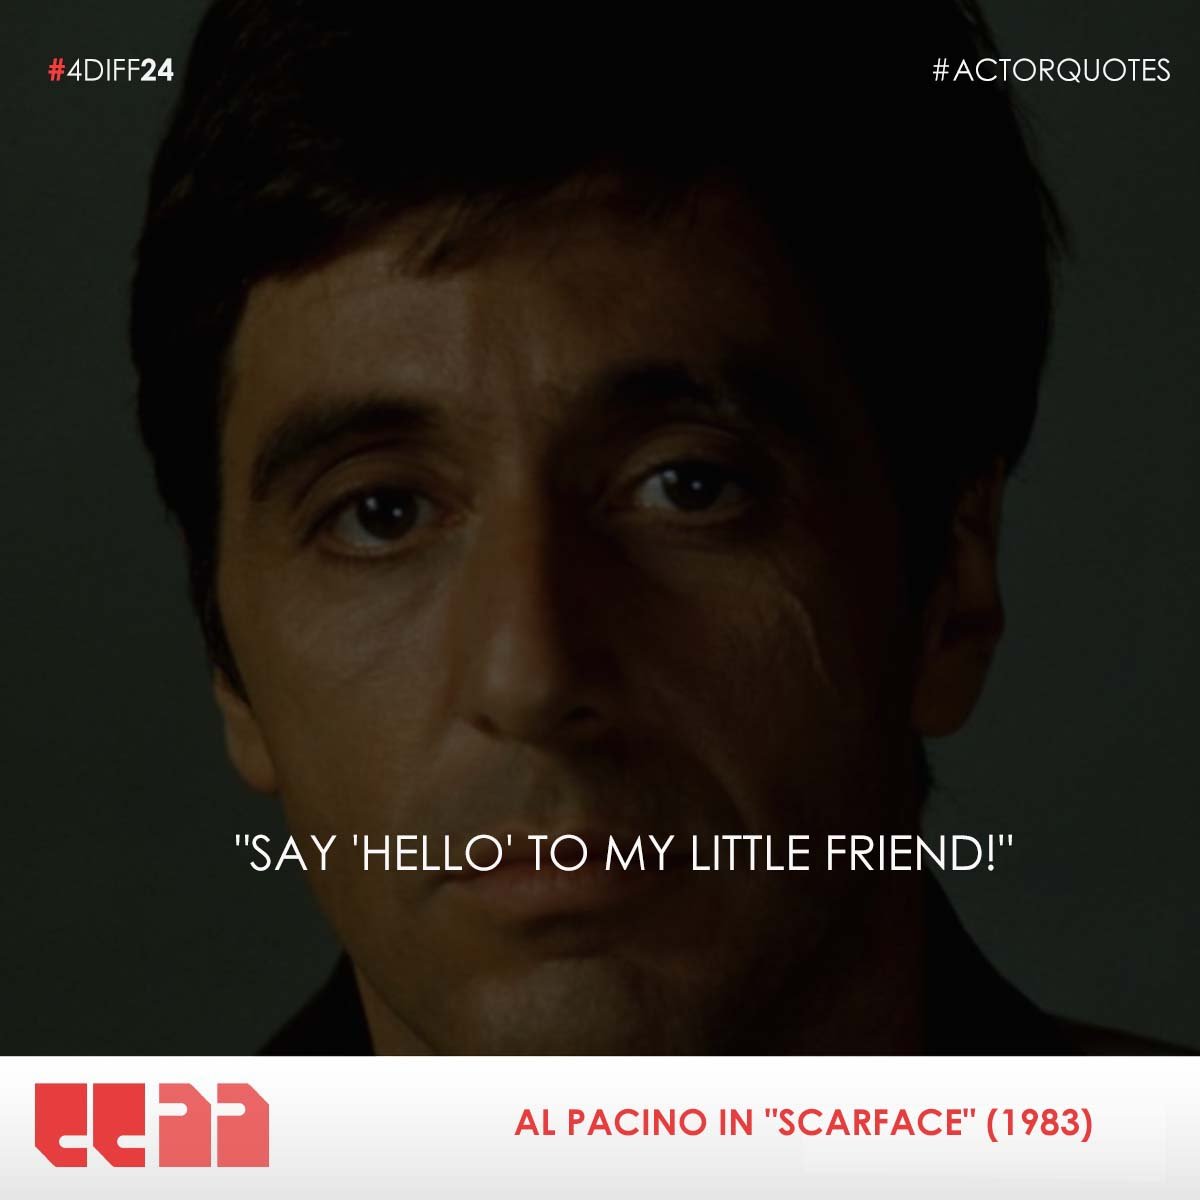 'Say 'hello' to my little friend!' - Al Pacino

#actorquotes #quotesdaily #fdiff #fdiff24